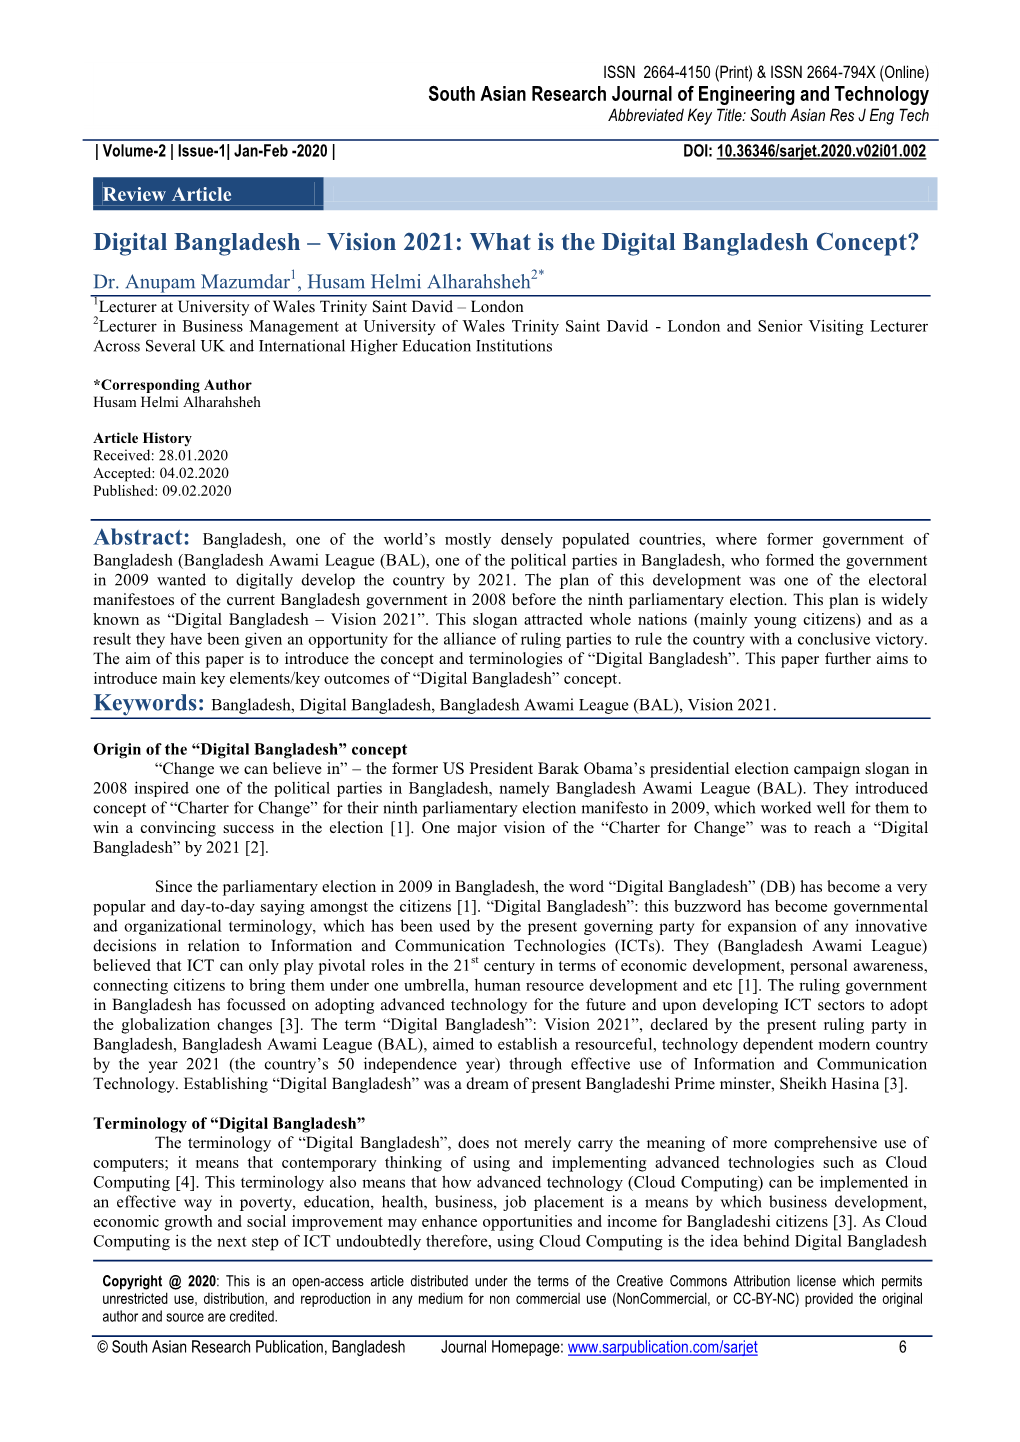 Digital Bangladesh – Vision 2021: What Is the Digital Bangladesh Concept?